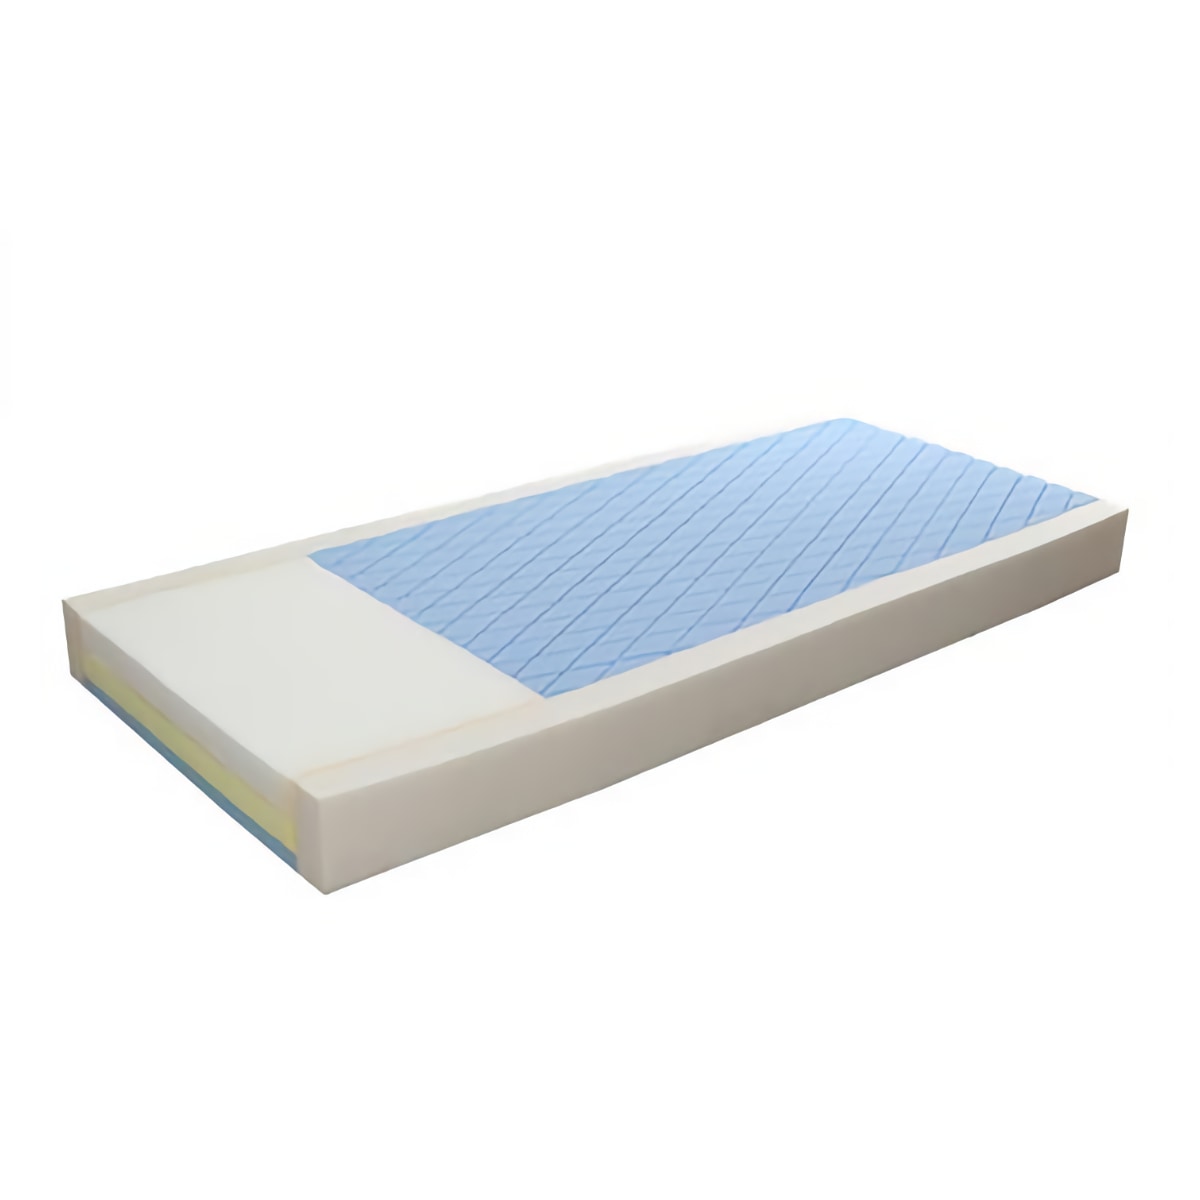 White foam mattress with blue insert